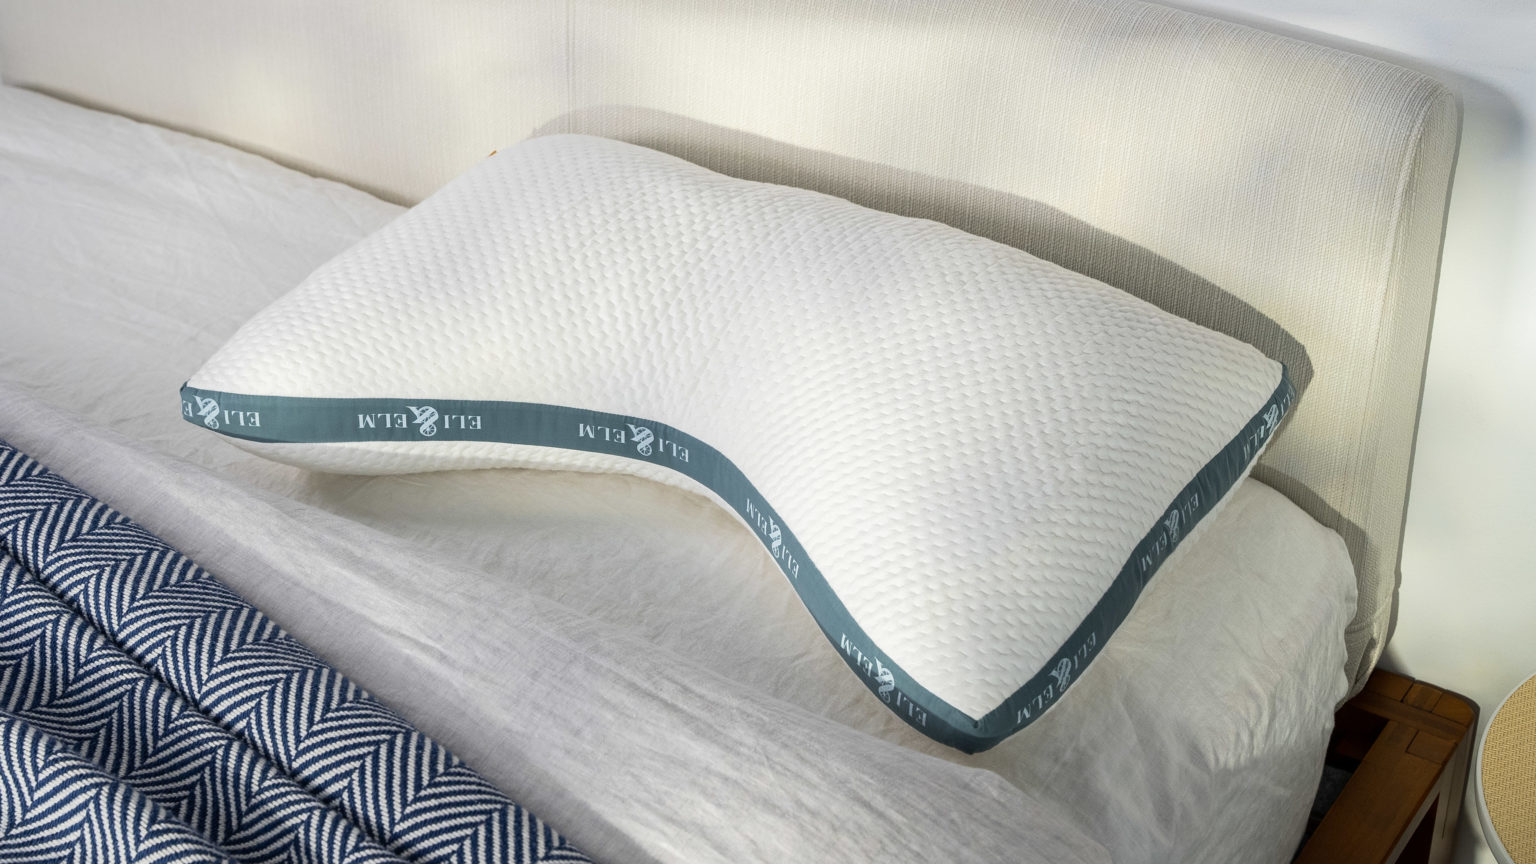 Cushion Lab Extra Dense Ergonomic Cervical Pillow for Firm Neck